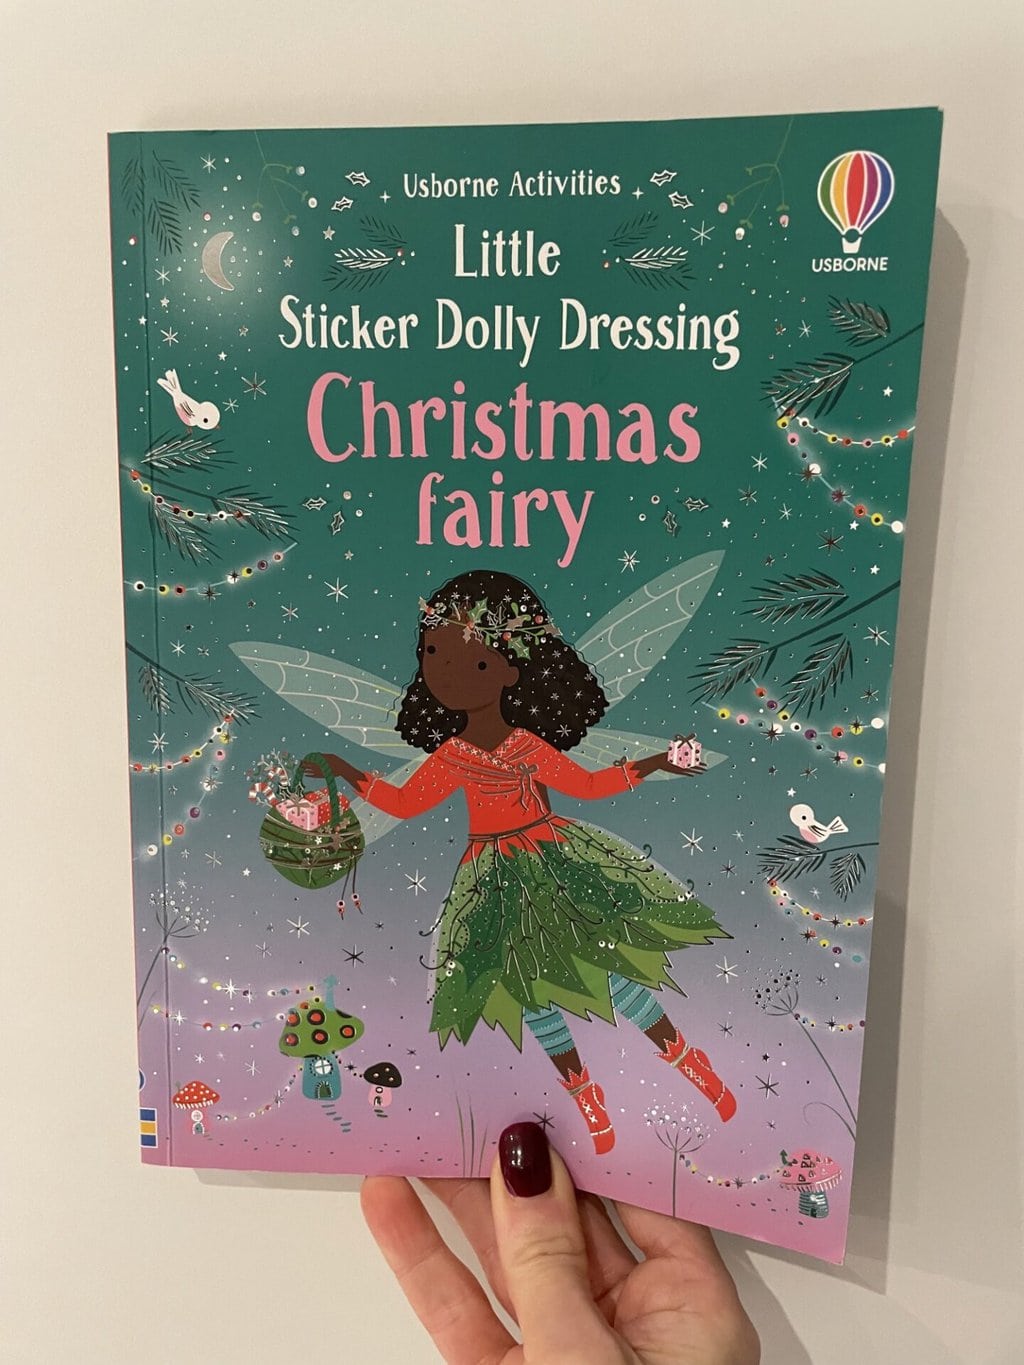 Little Sticker Dolly Dressing, Christmas Fairy